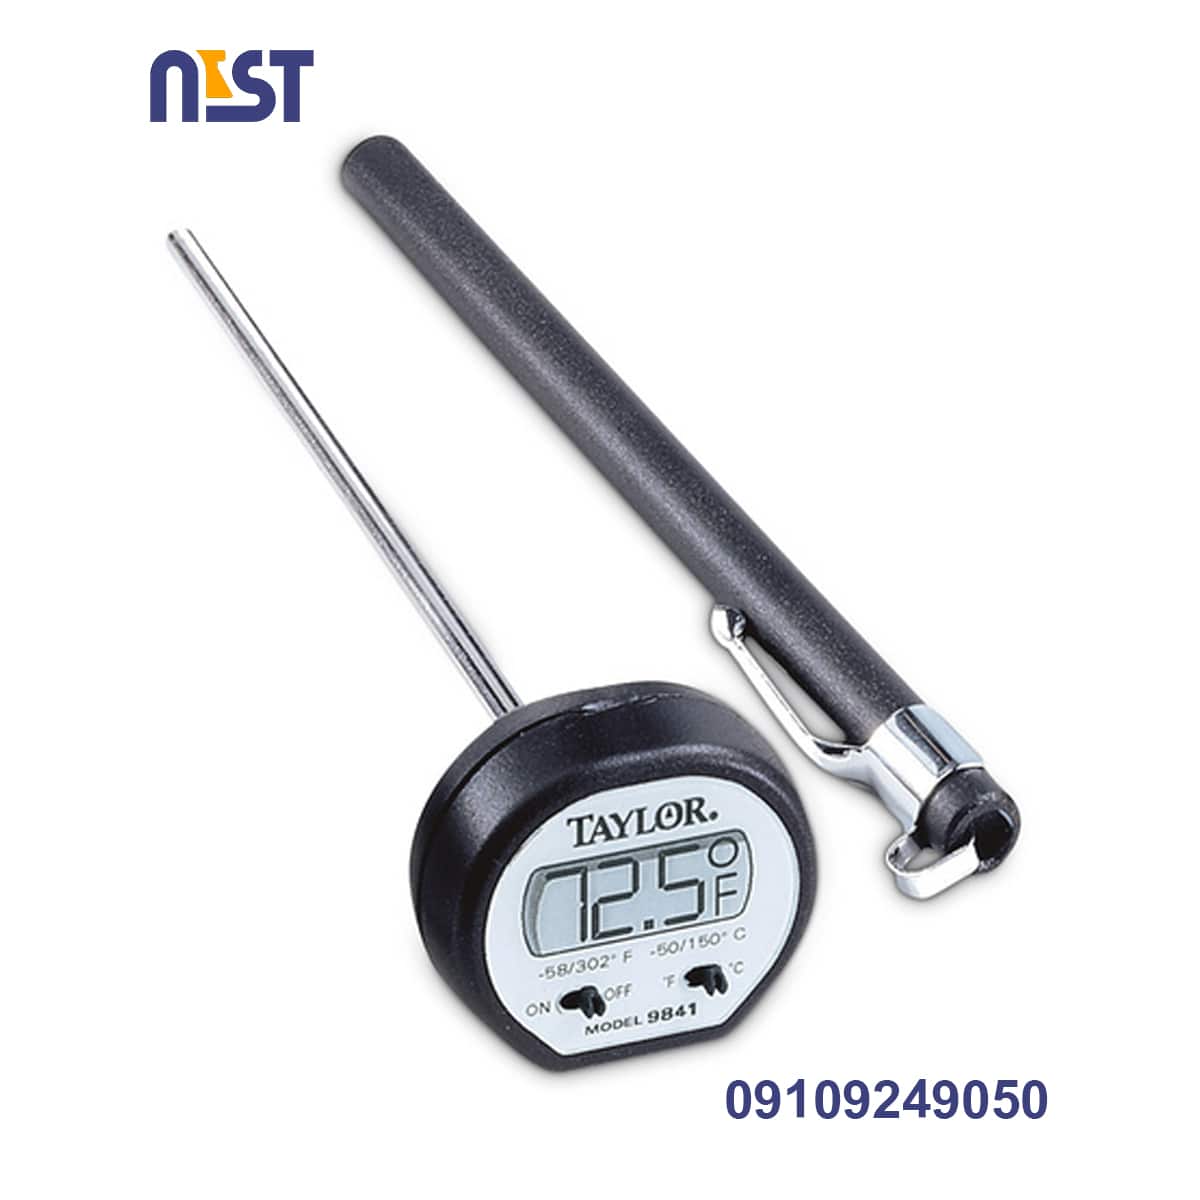 Laboratory thermometer